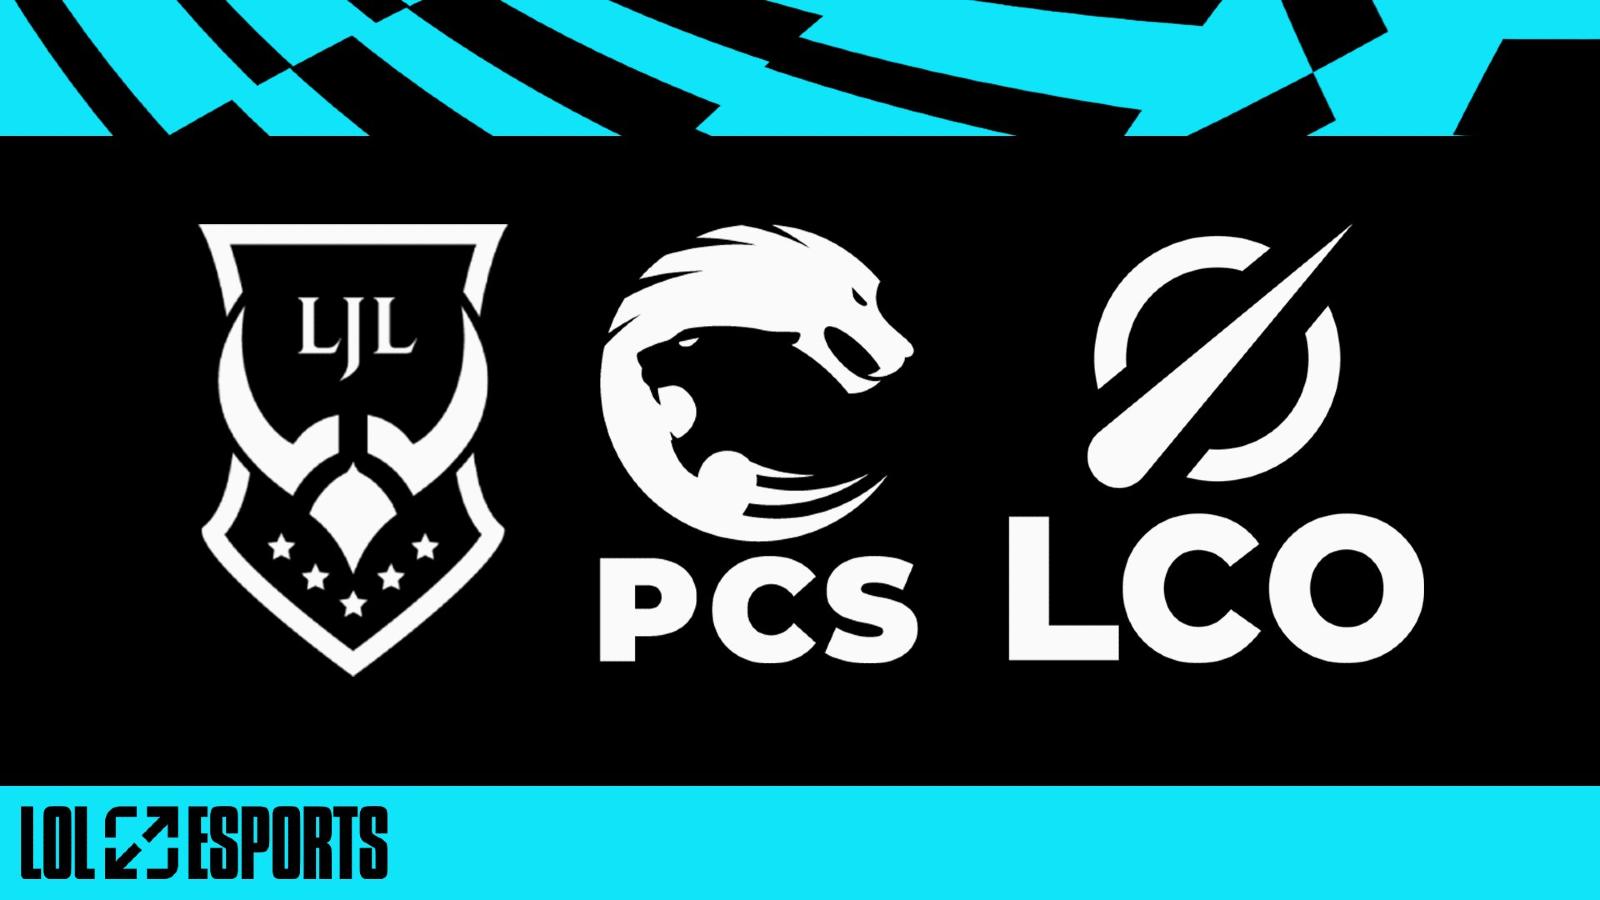 LJL PCS and LCO Logos